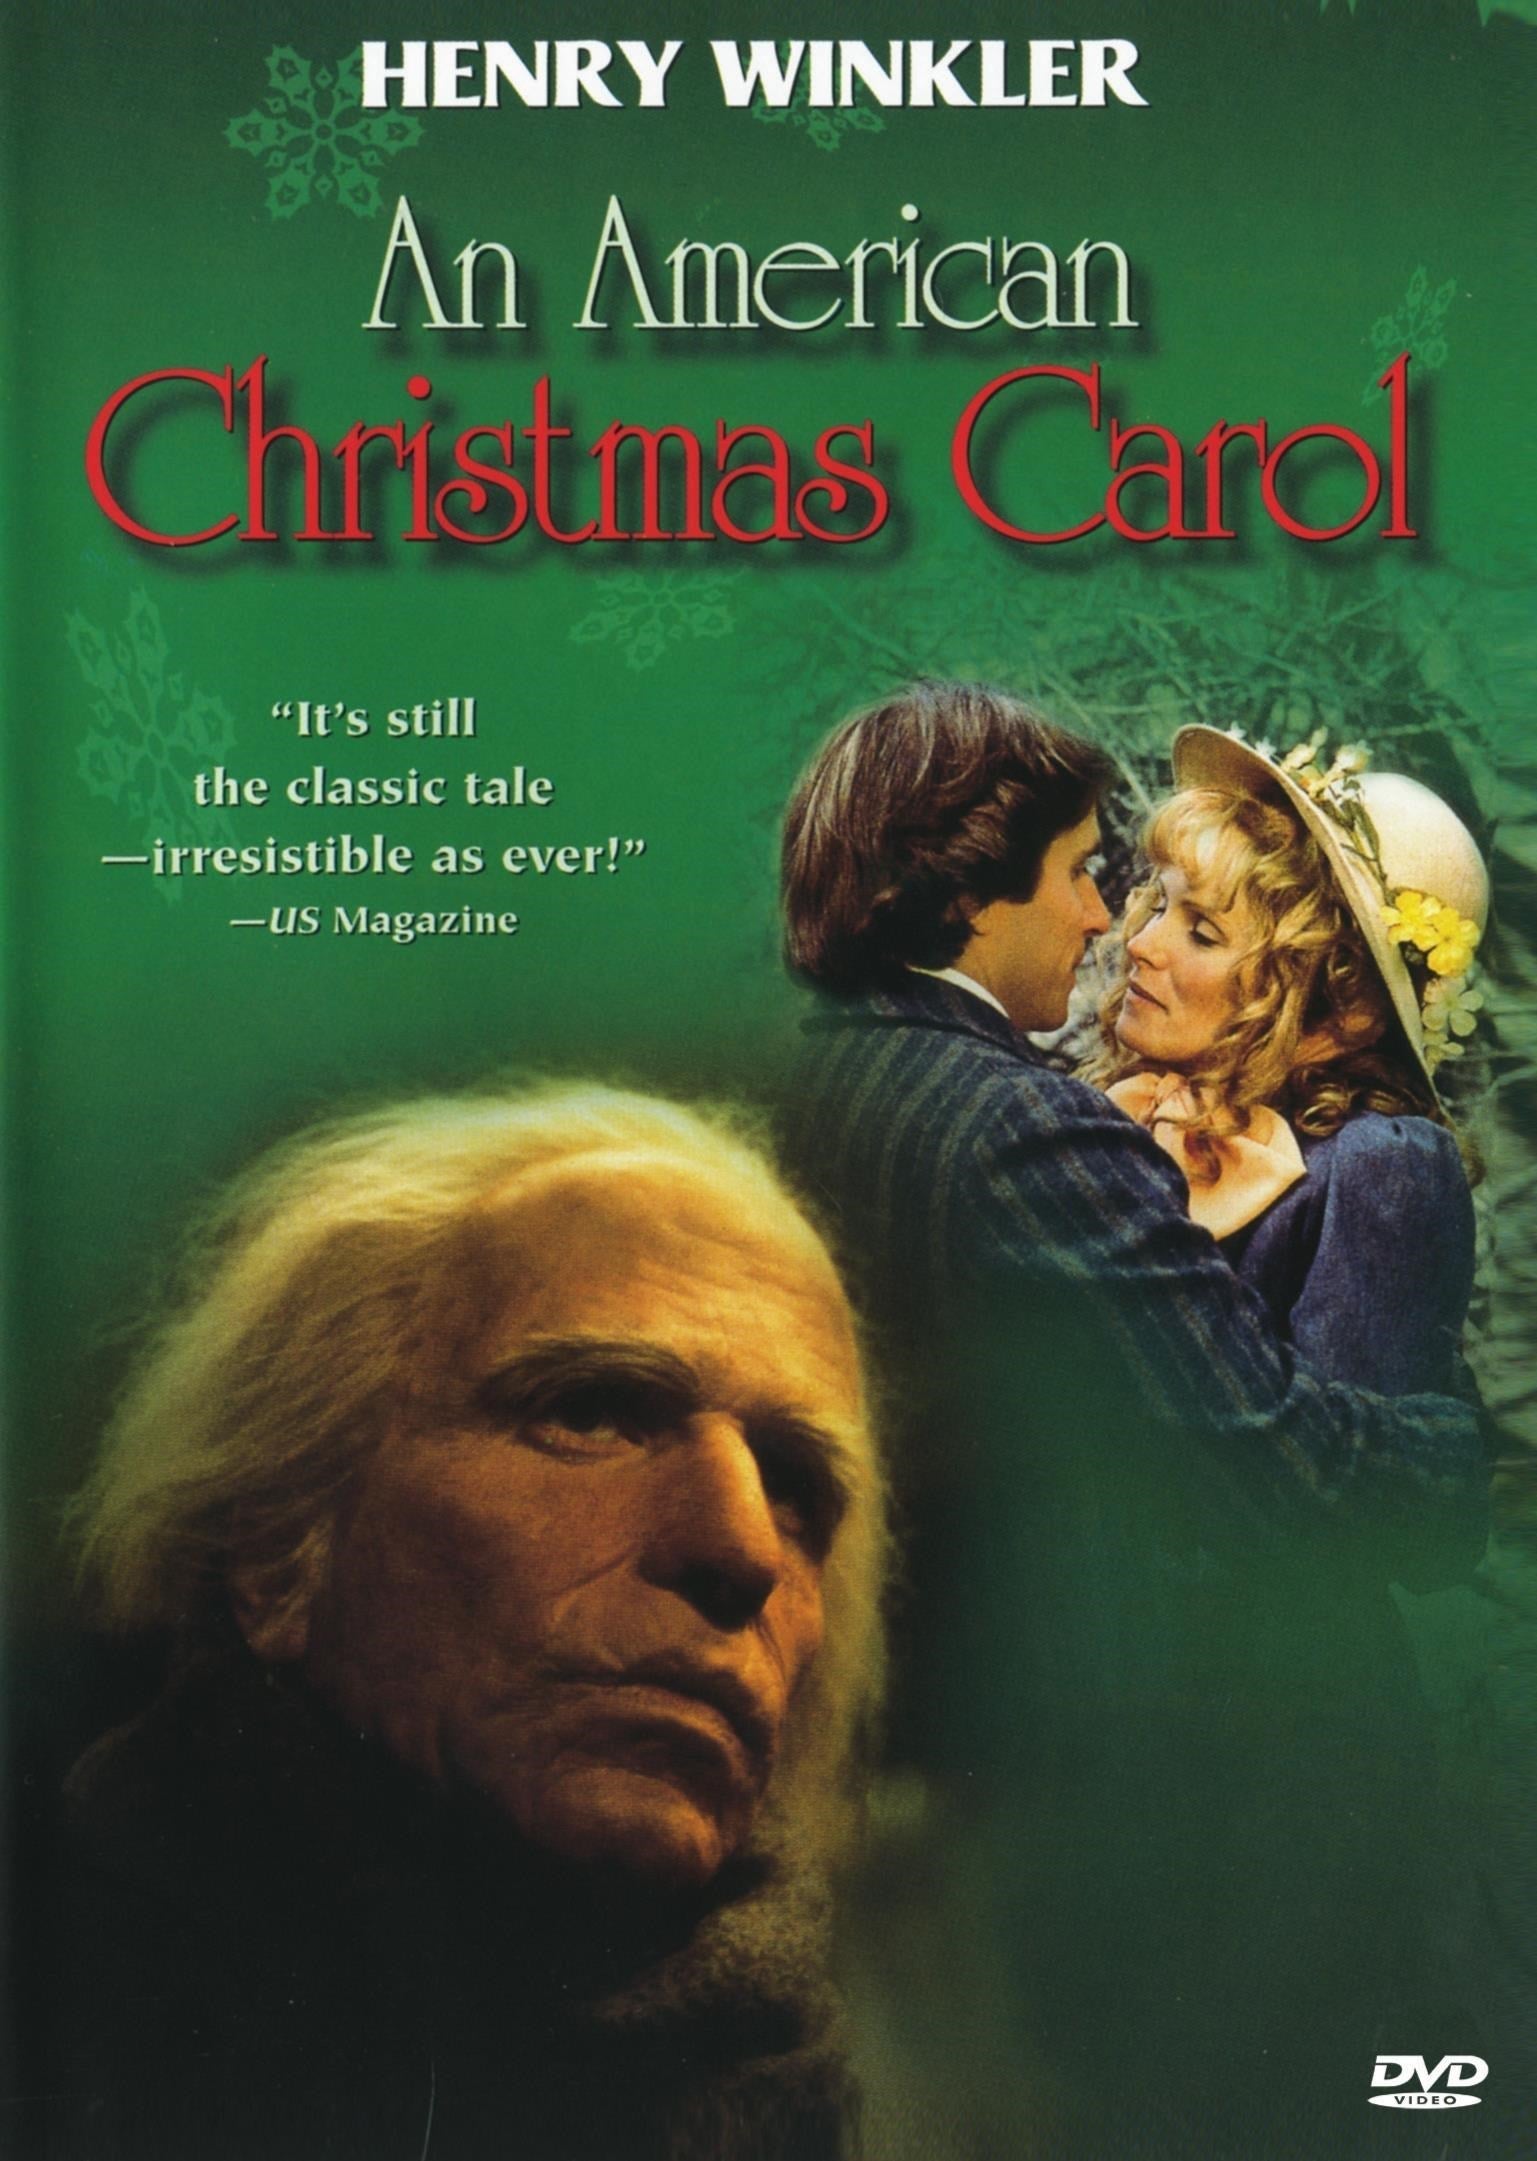 An American Christmas Carol rareandcollectibledvds